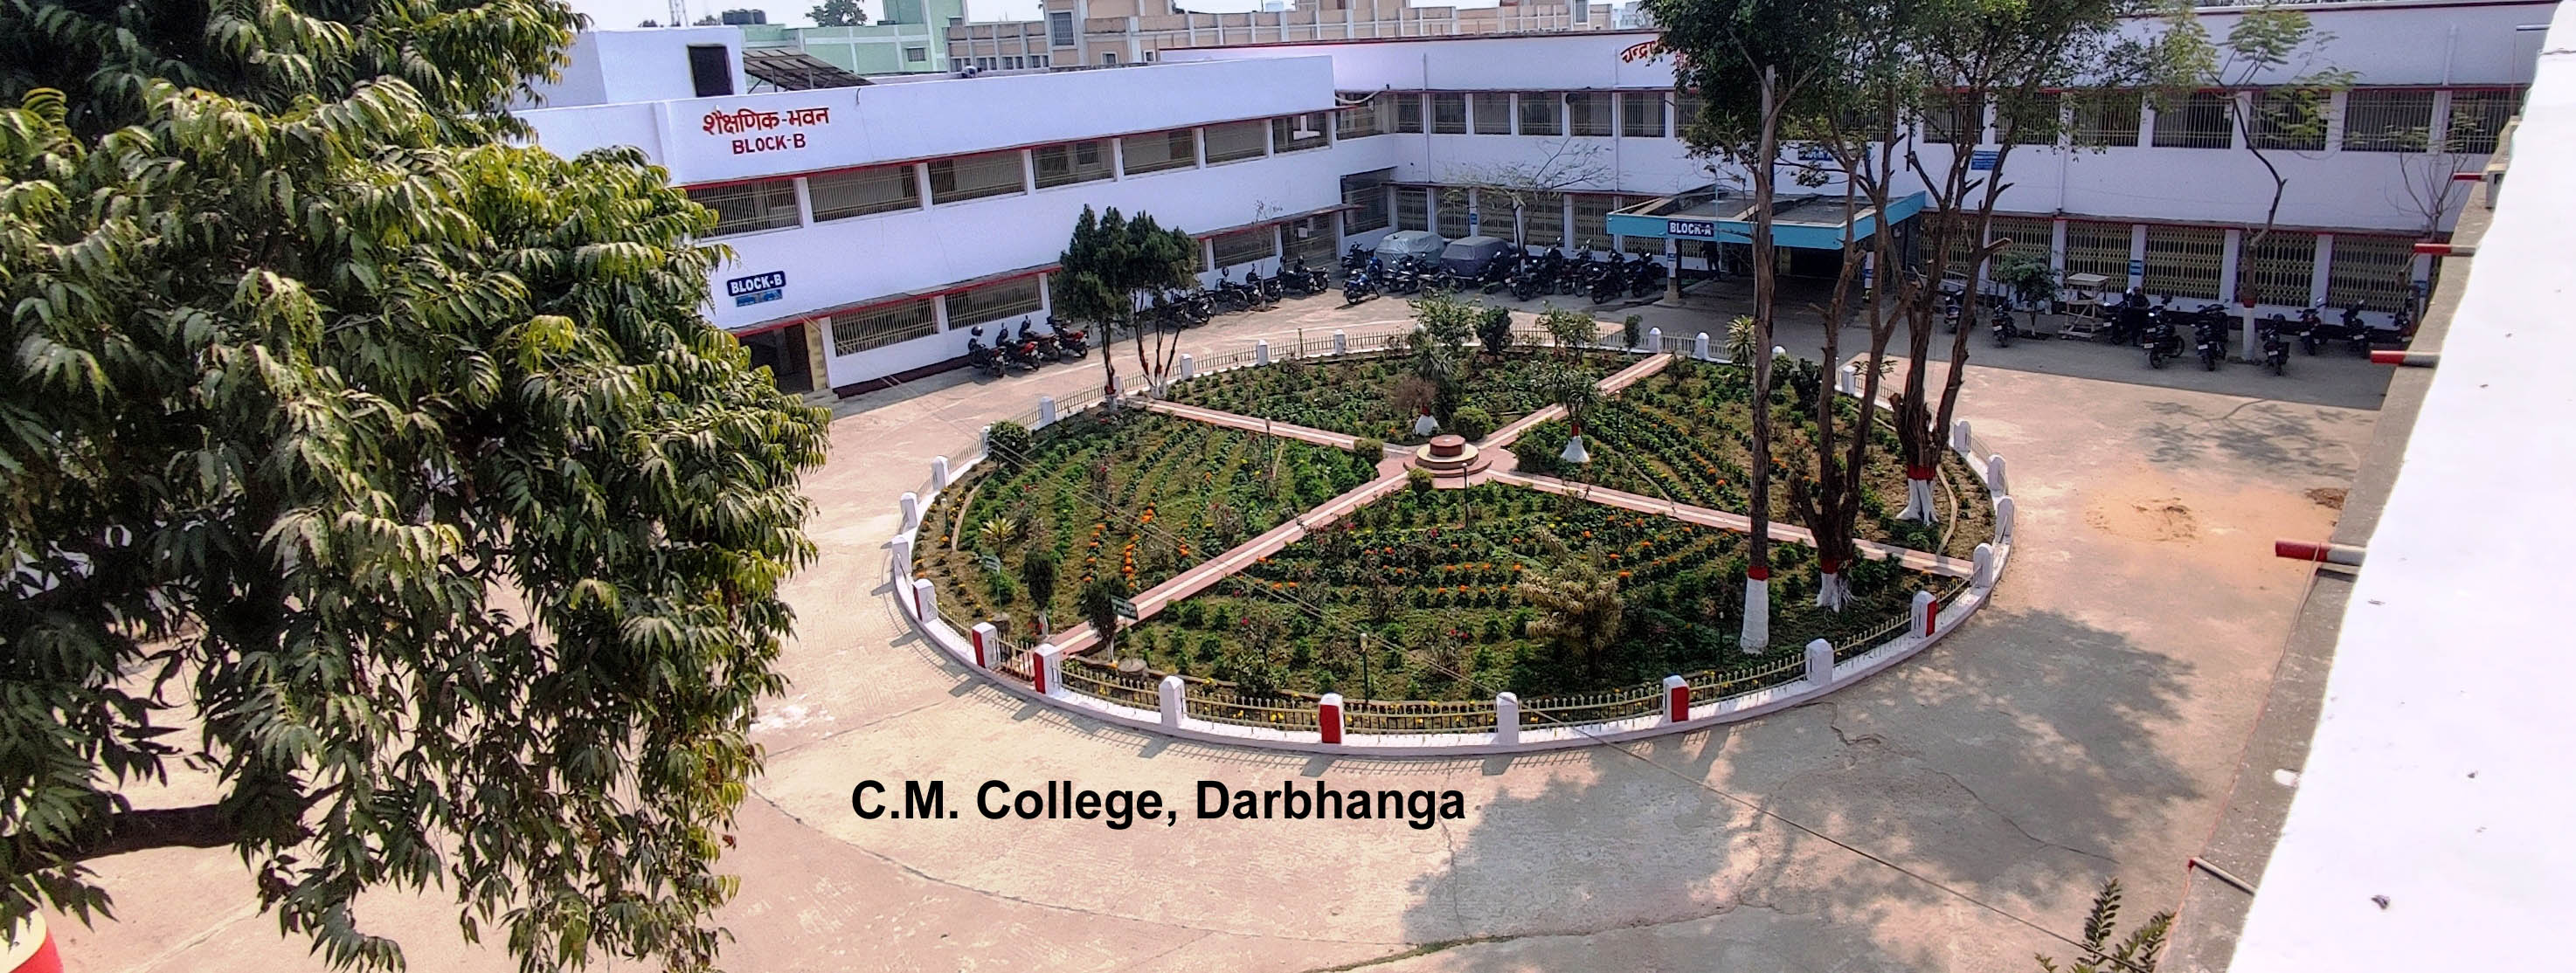 C. M. College, Darbhanga